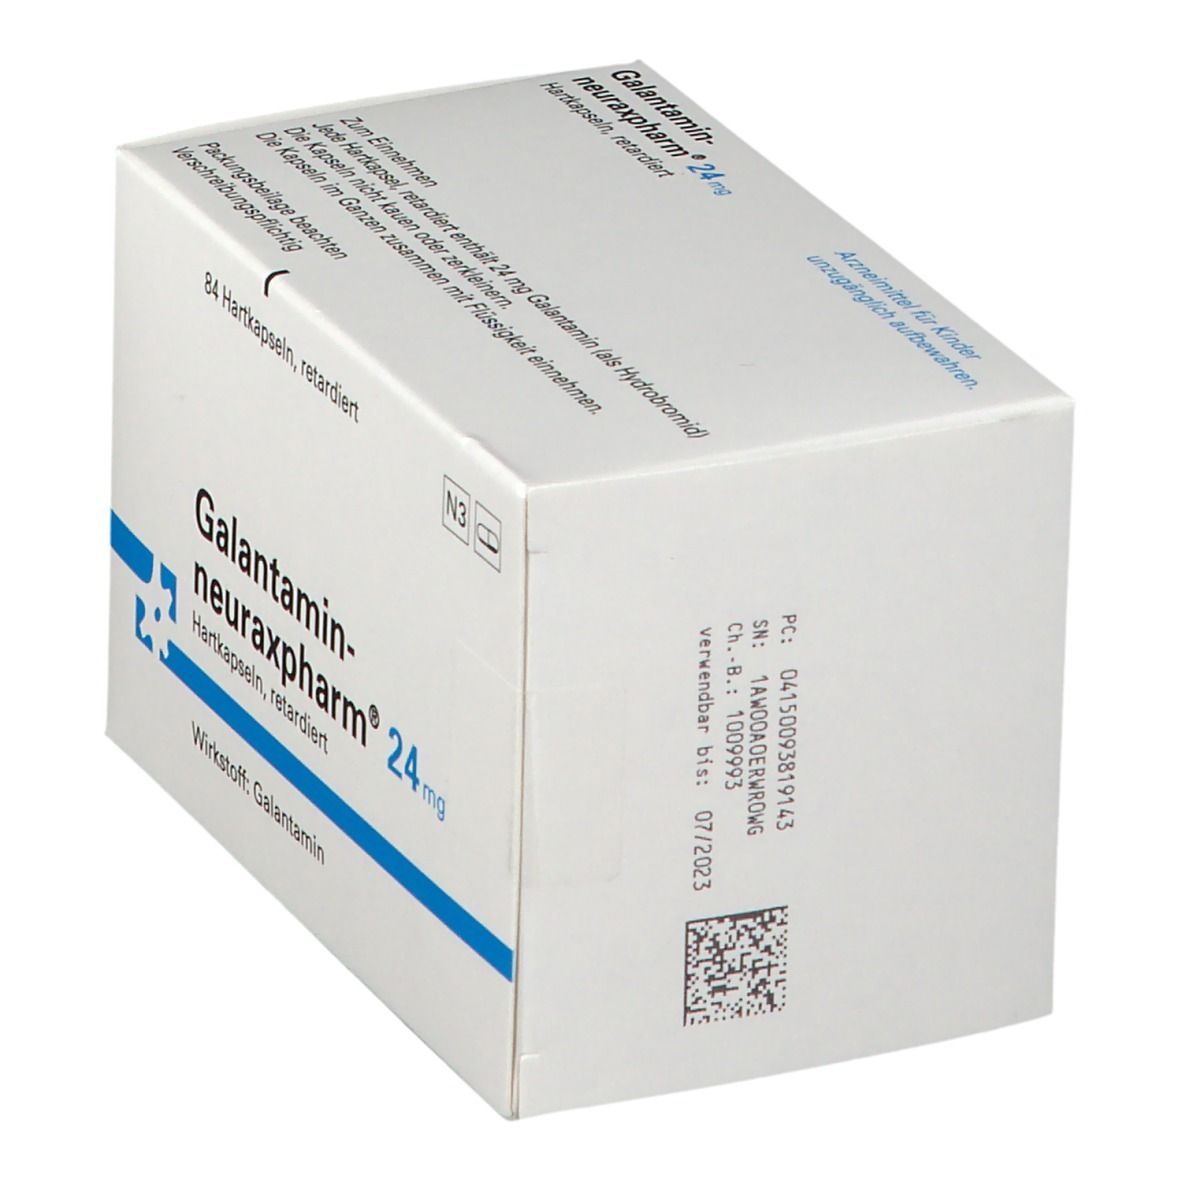 Galantamin-neuraxpharm® 24 mg